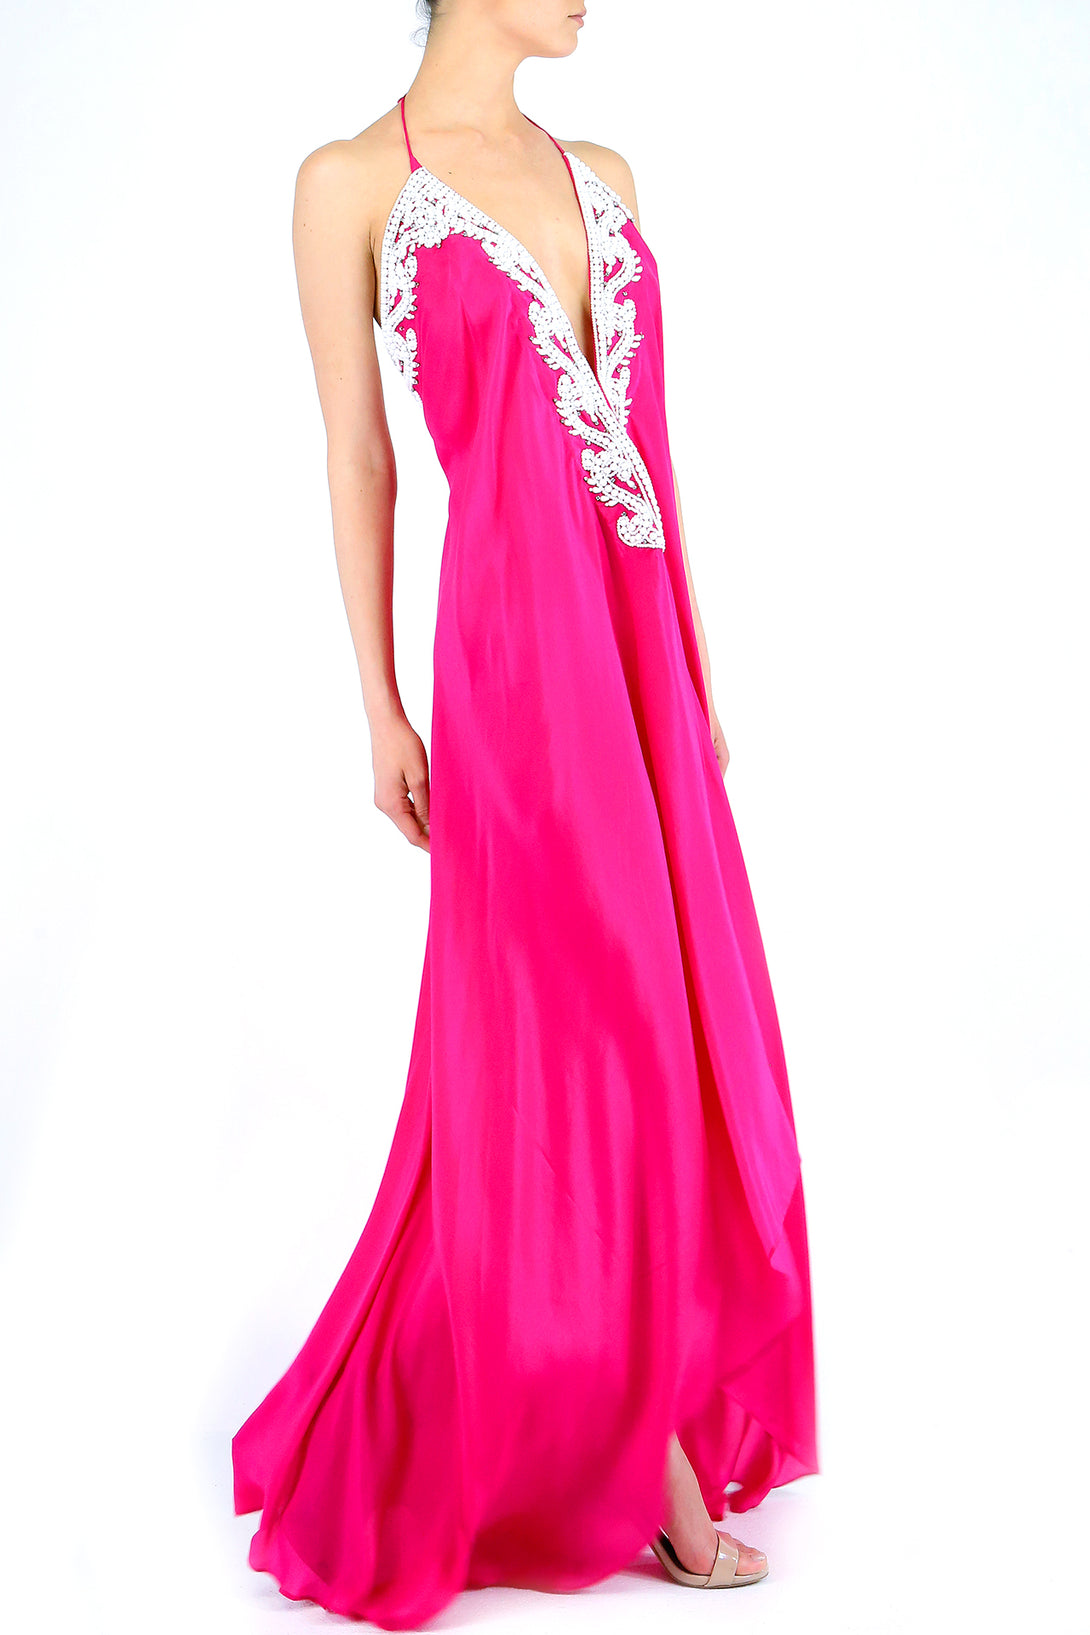  long dress pink colour, long summer dresses for women, plunge neck cocktail dress,